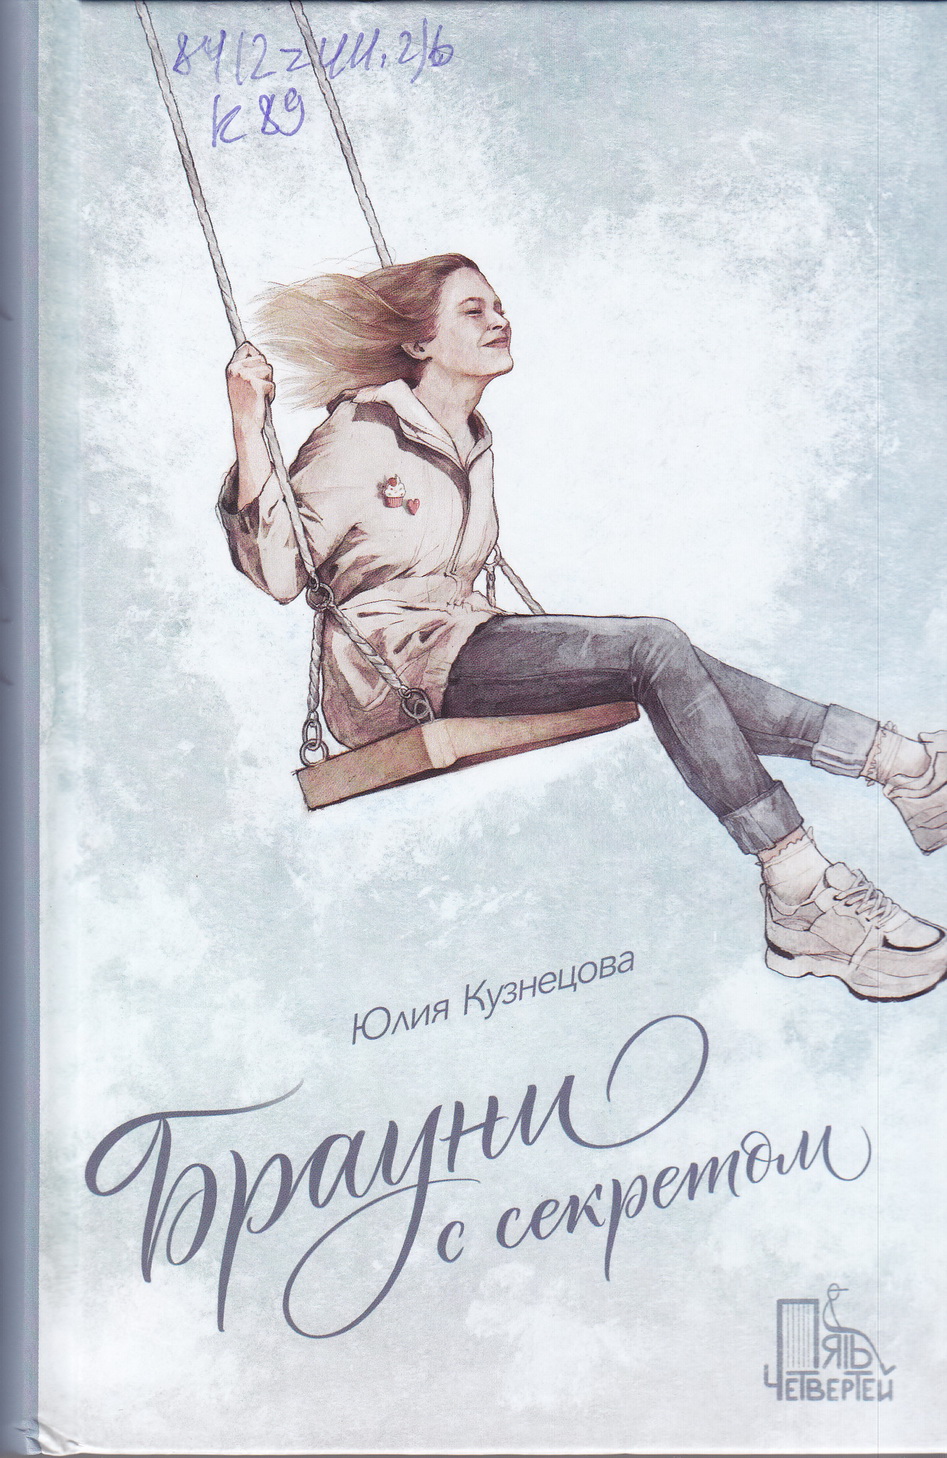 Кузнецова, Ю. Н. Брауни с секретом (фото книги из фонда библиотеки)